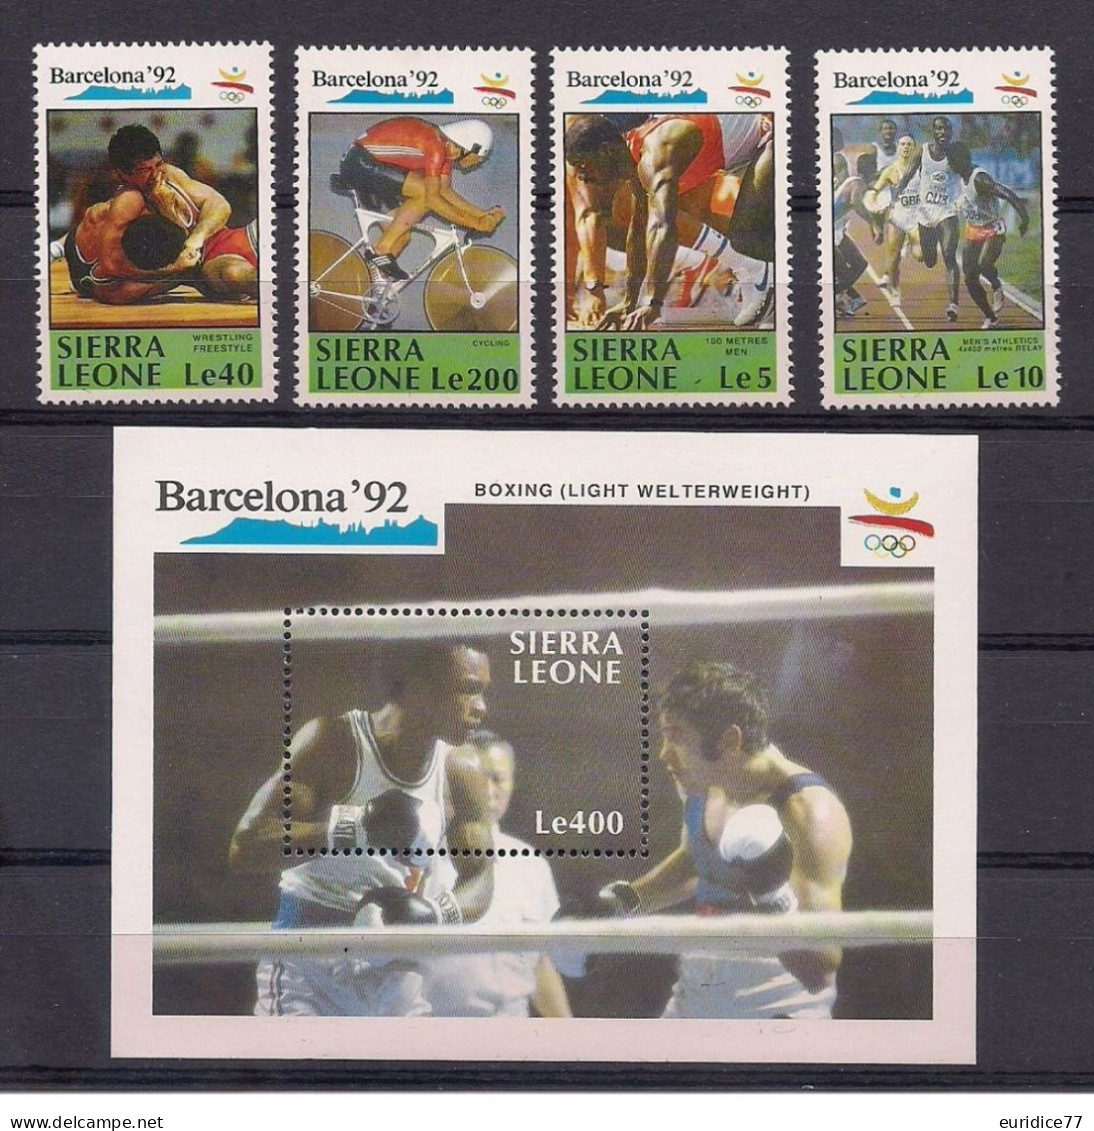 Sierra Leone 1990 - Olympic Games Barcelona 92 Mnh** - Ete 1992: Barcelone